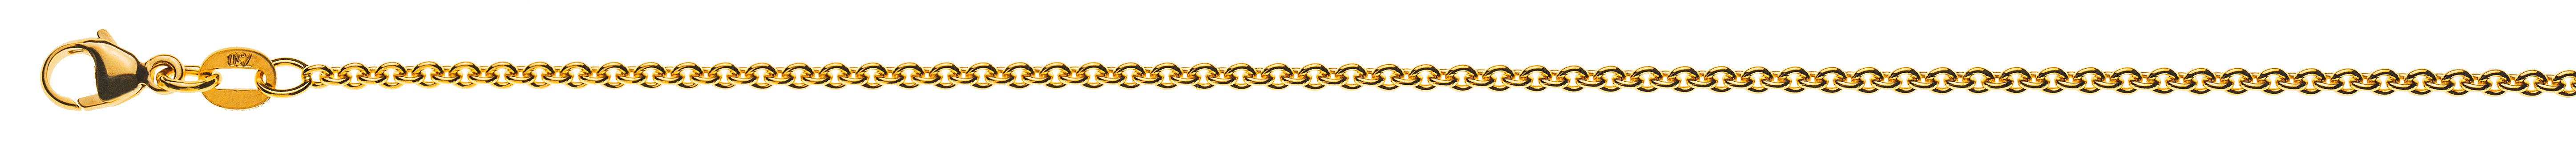 AURONOS Prestige Necklace Yellow Gold 18K Round Anchor 45cm 1.9mm